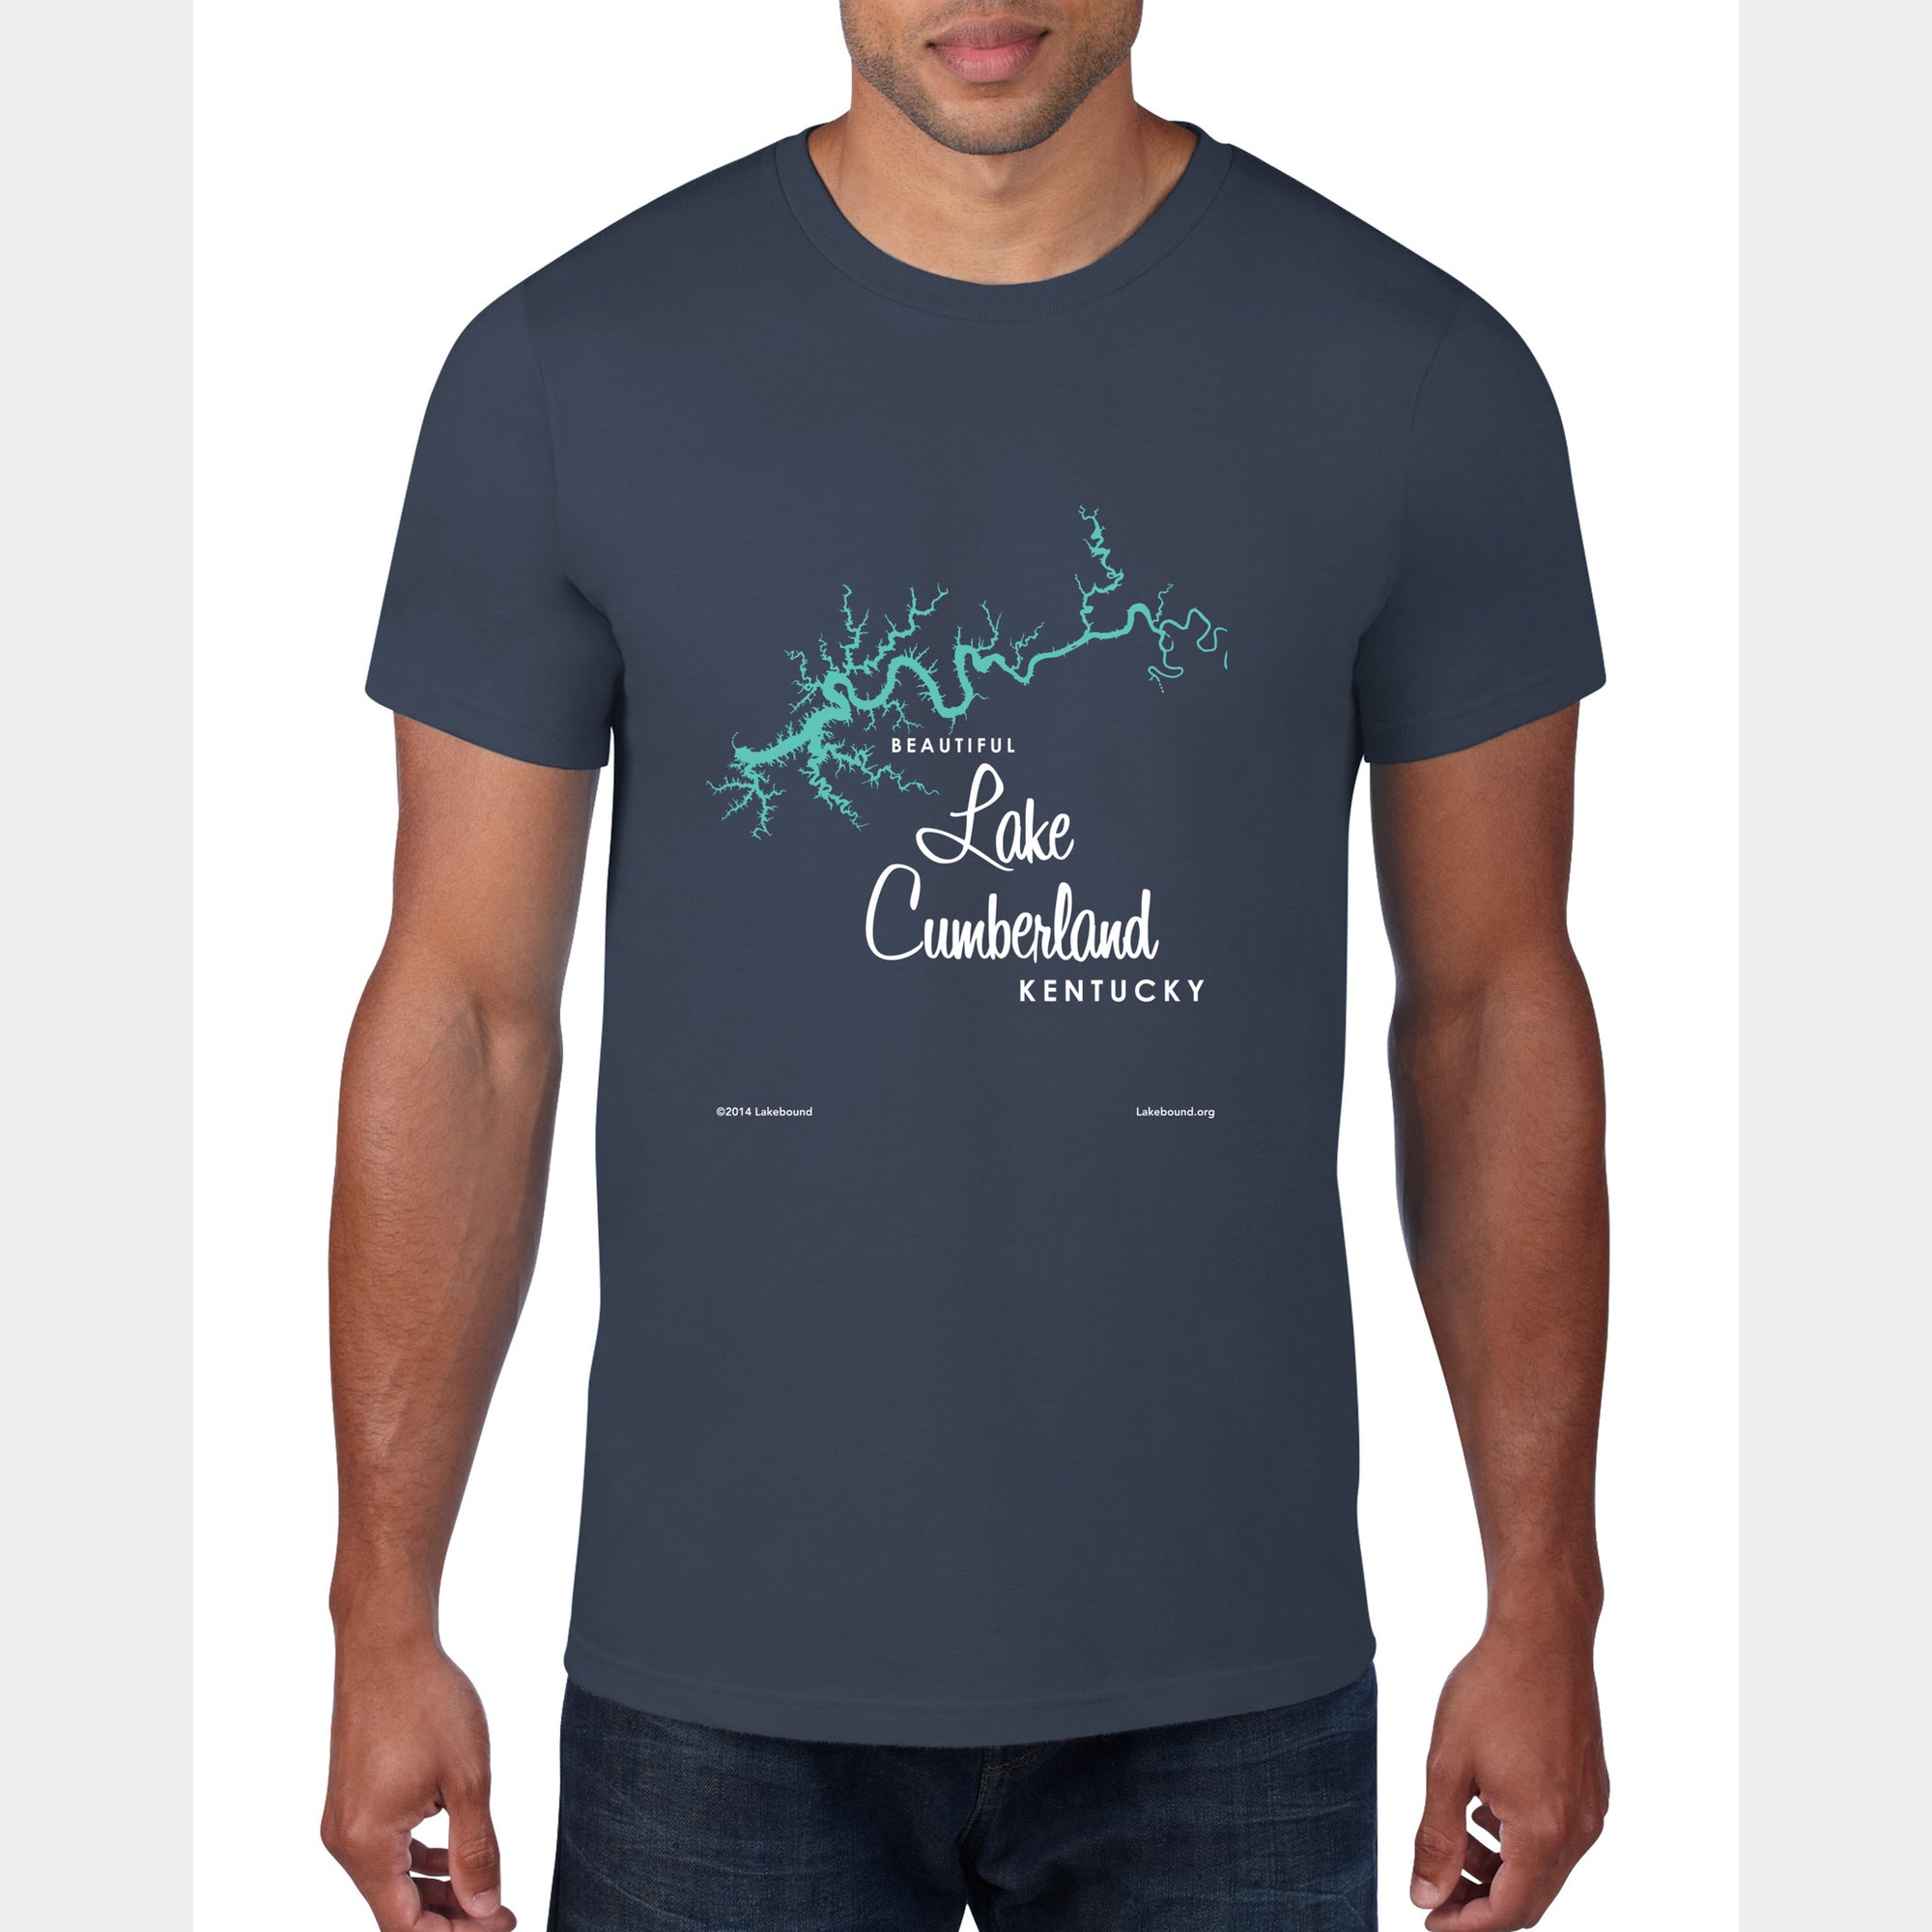 Lake Cumberland Kentucky, T-Shirt